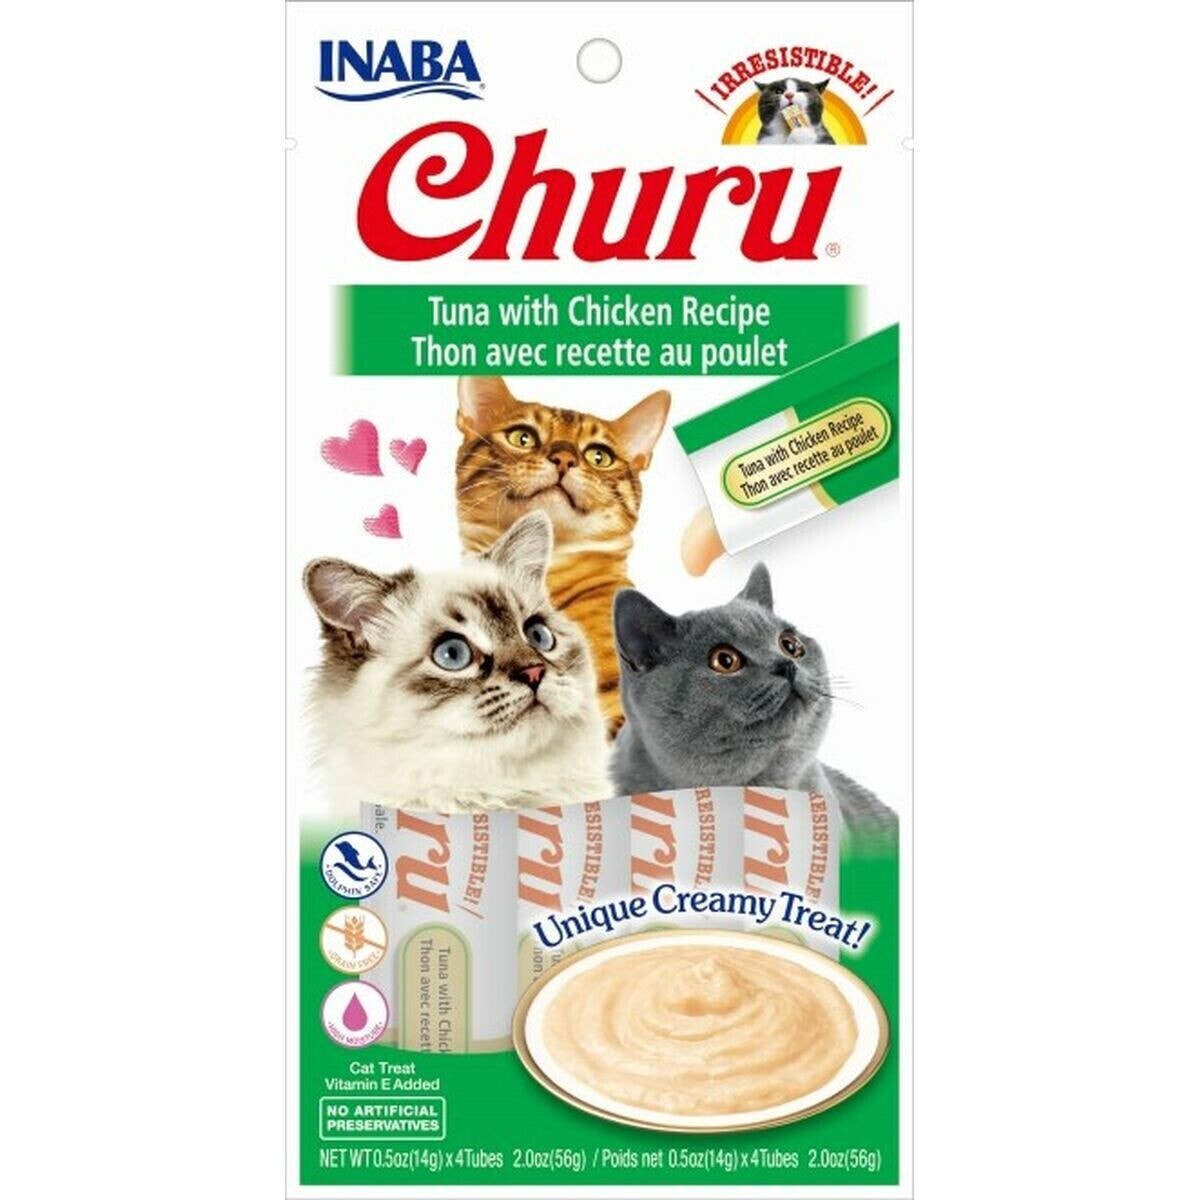 Snack for Cats Inaba EU102 4 x 14 g Конфеты Курица Тунец